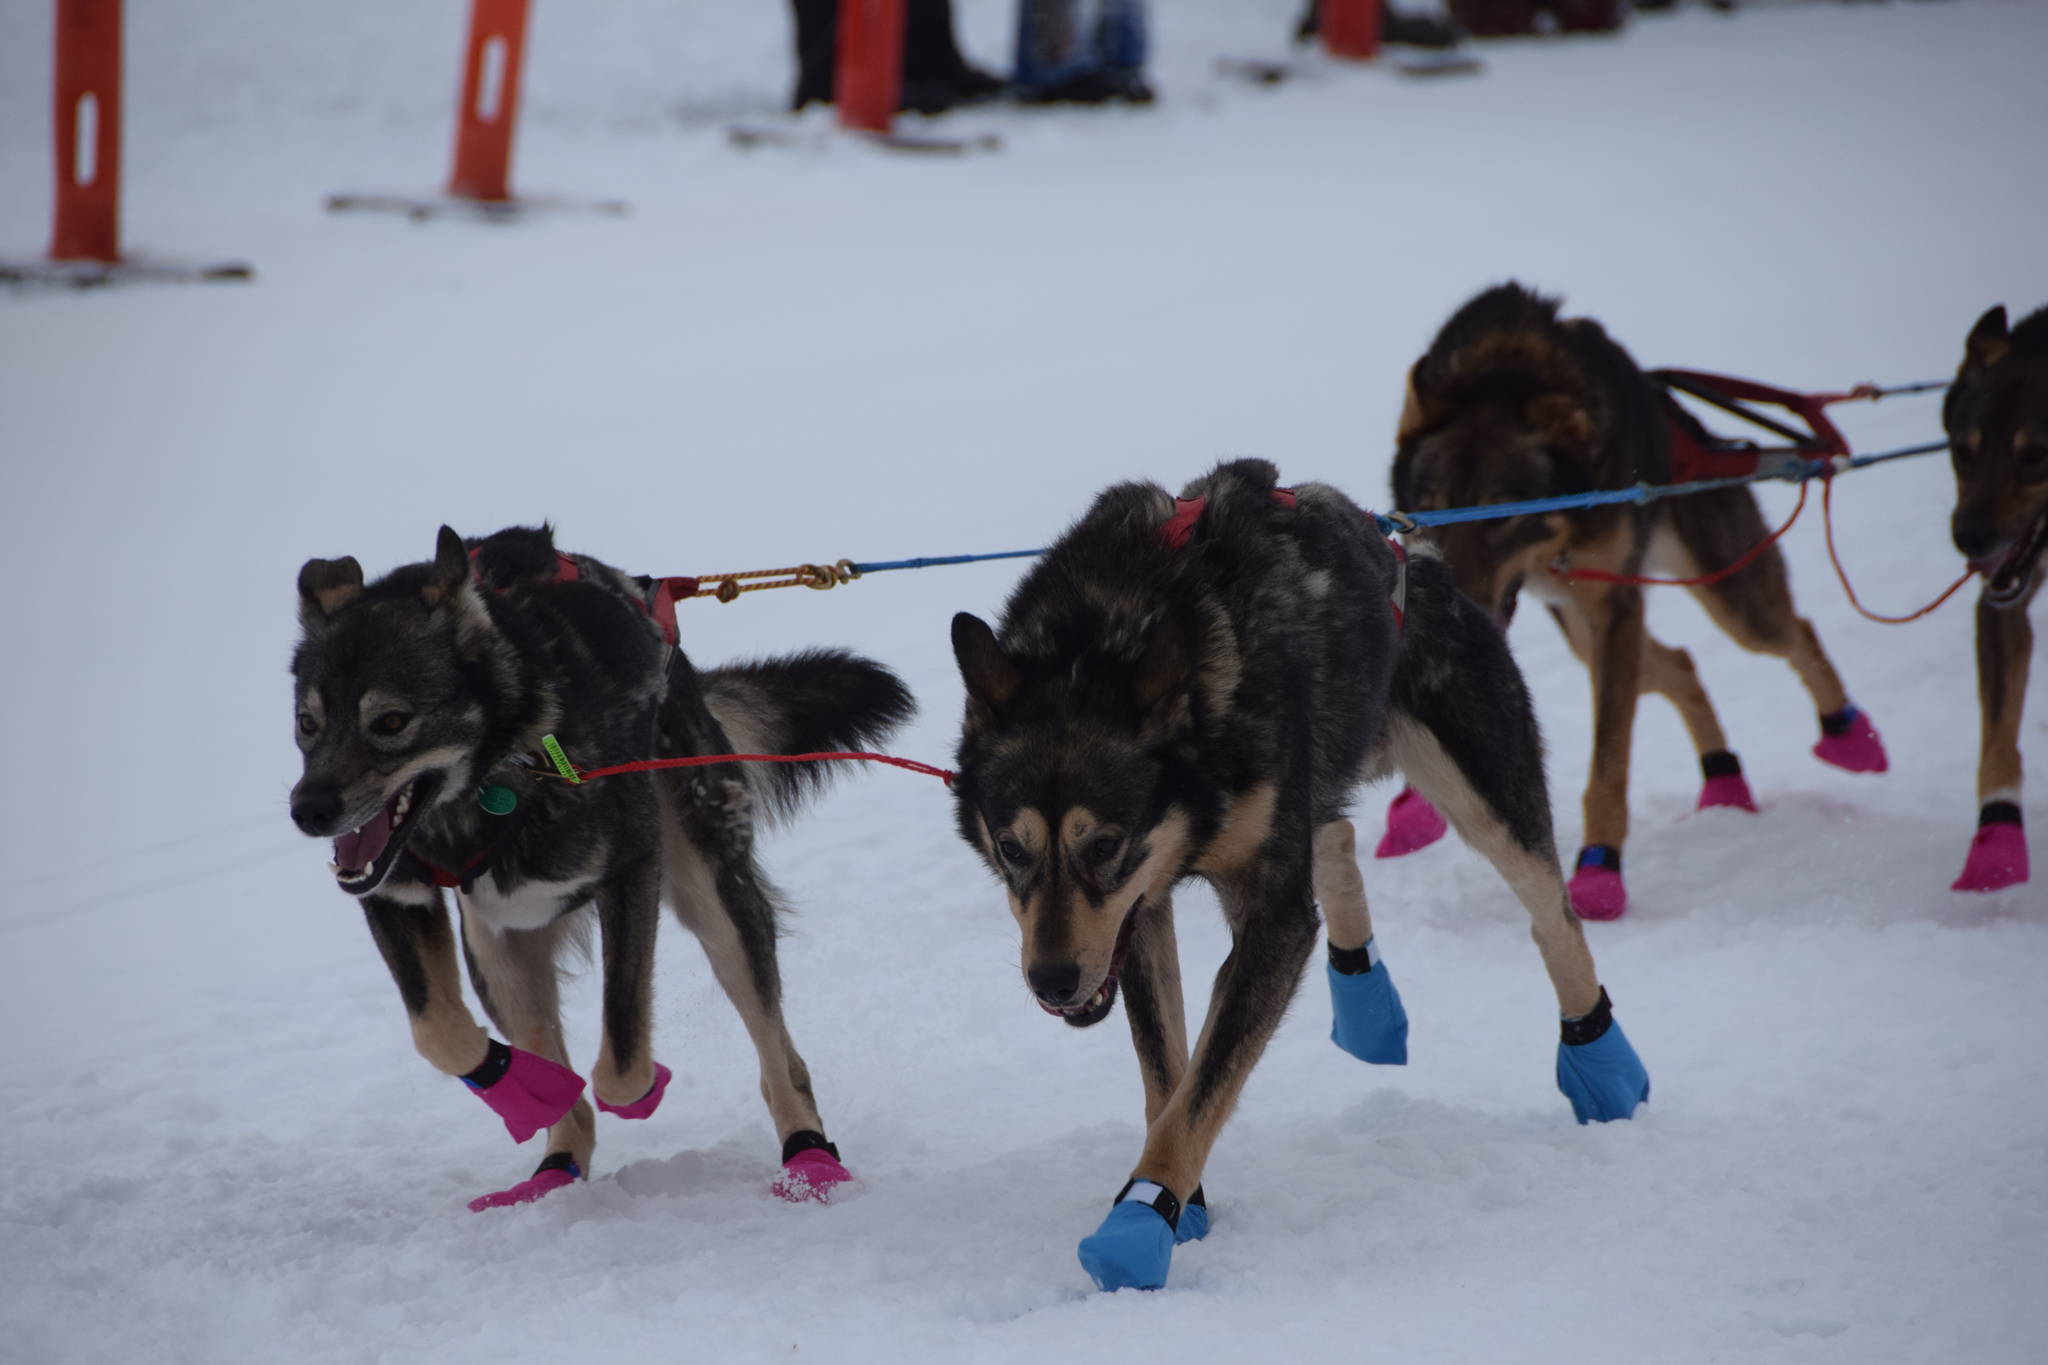 Musher teams competing in the Tustumena 200 Sled Dog Race take off from Freddie’s Roadhouse on Saturday, Jan. 26, 2019 in Ninilchik, Alaska. (Photo by Brian Mazurek/Peninsula Clarion)